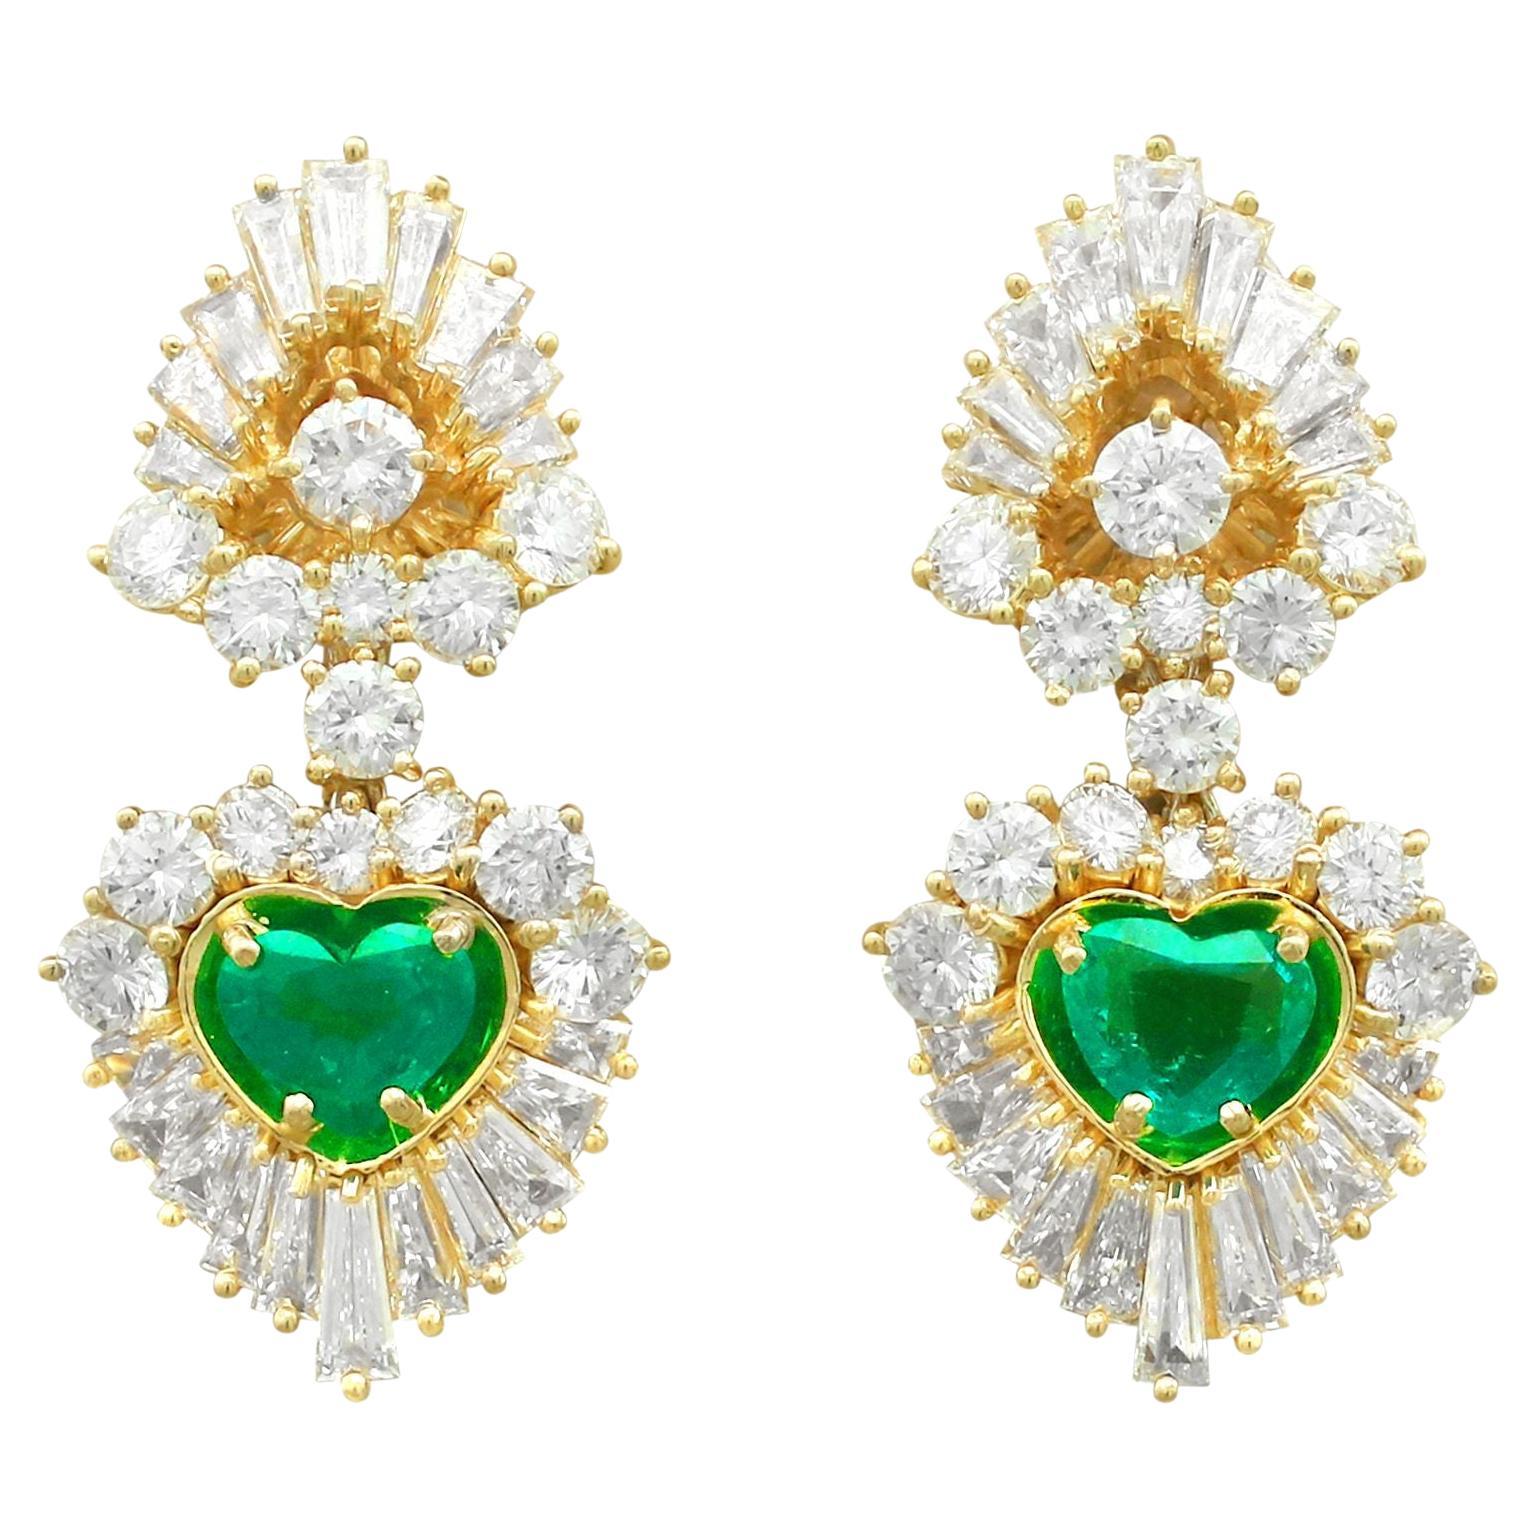 Vintage 2.48 Carat Emerald and 7.05 Carat Diamond Yellow Gold Earrings